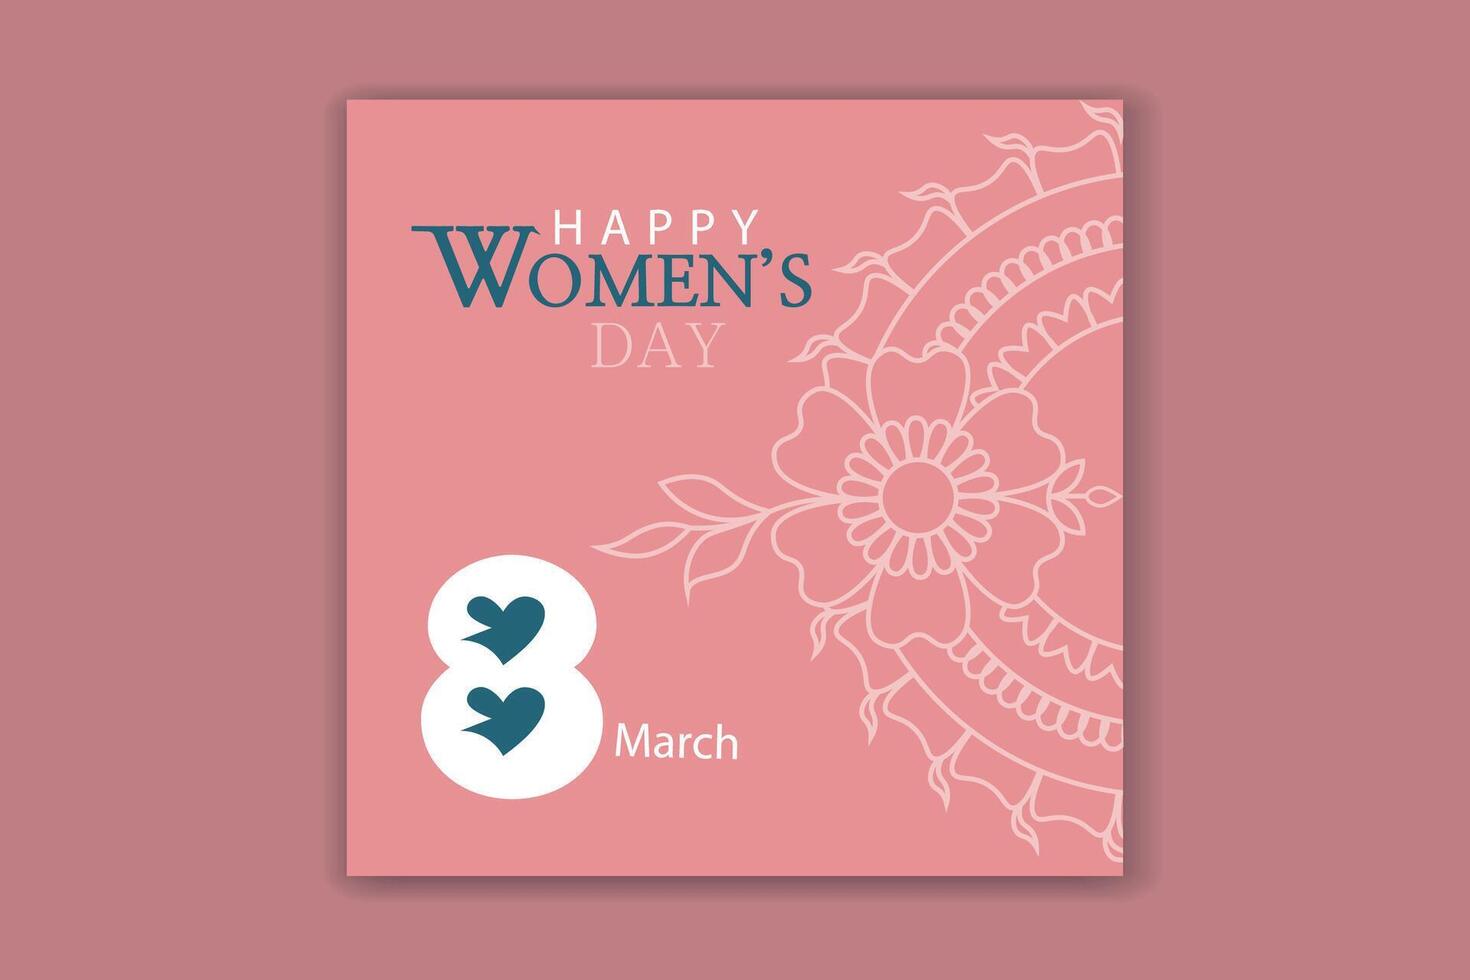 glücklich Damen Tag Sozial Medien Banner Design vektor